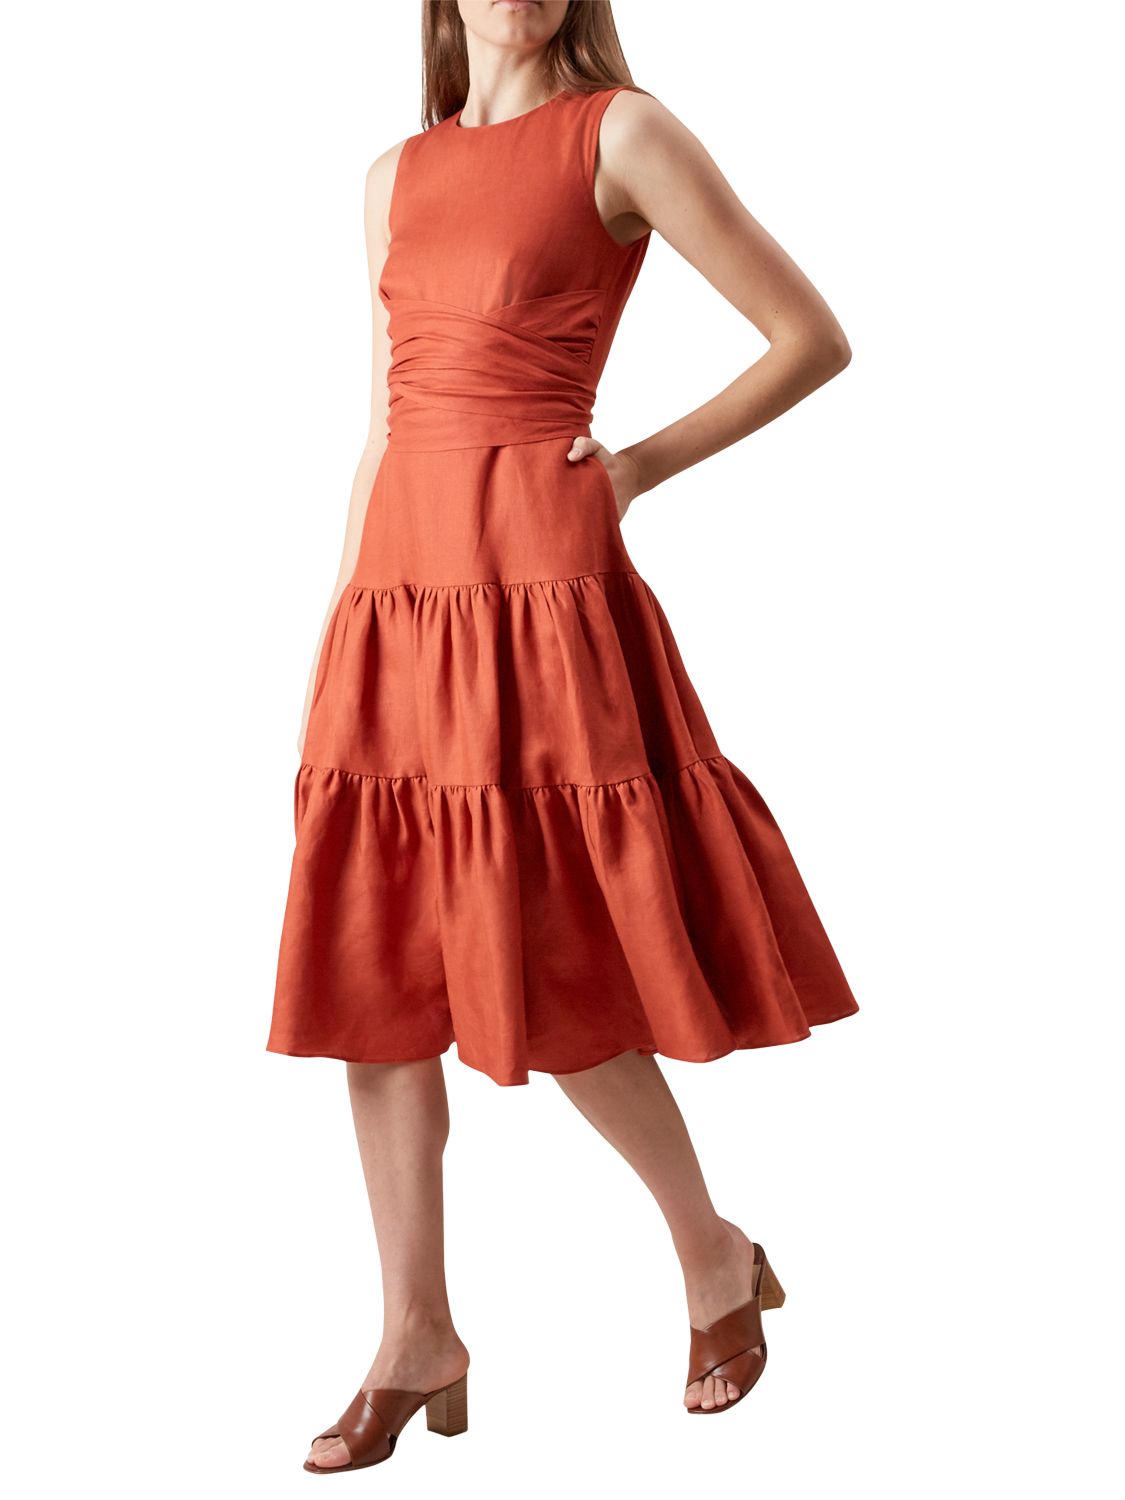 Hobbs Seville Dress, Cayenne Red, 8